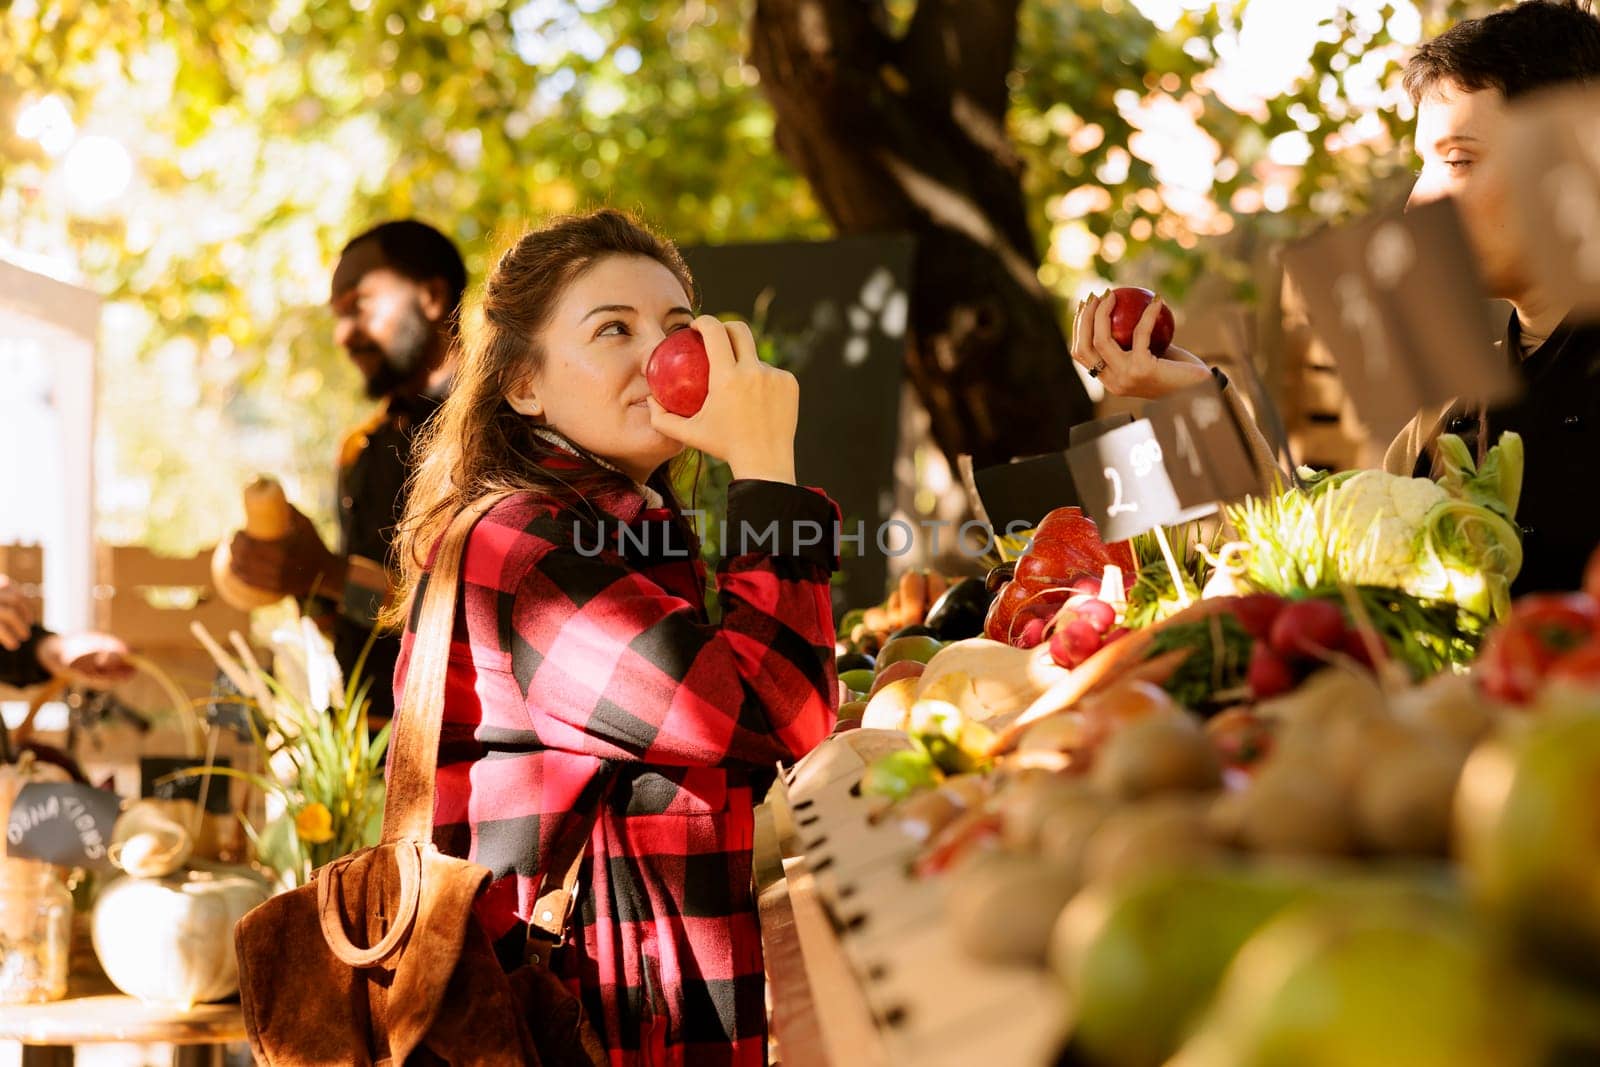 Woman enjoys organic smell of apples by DCStudio